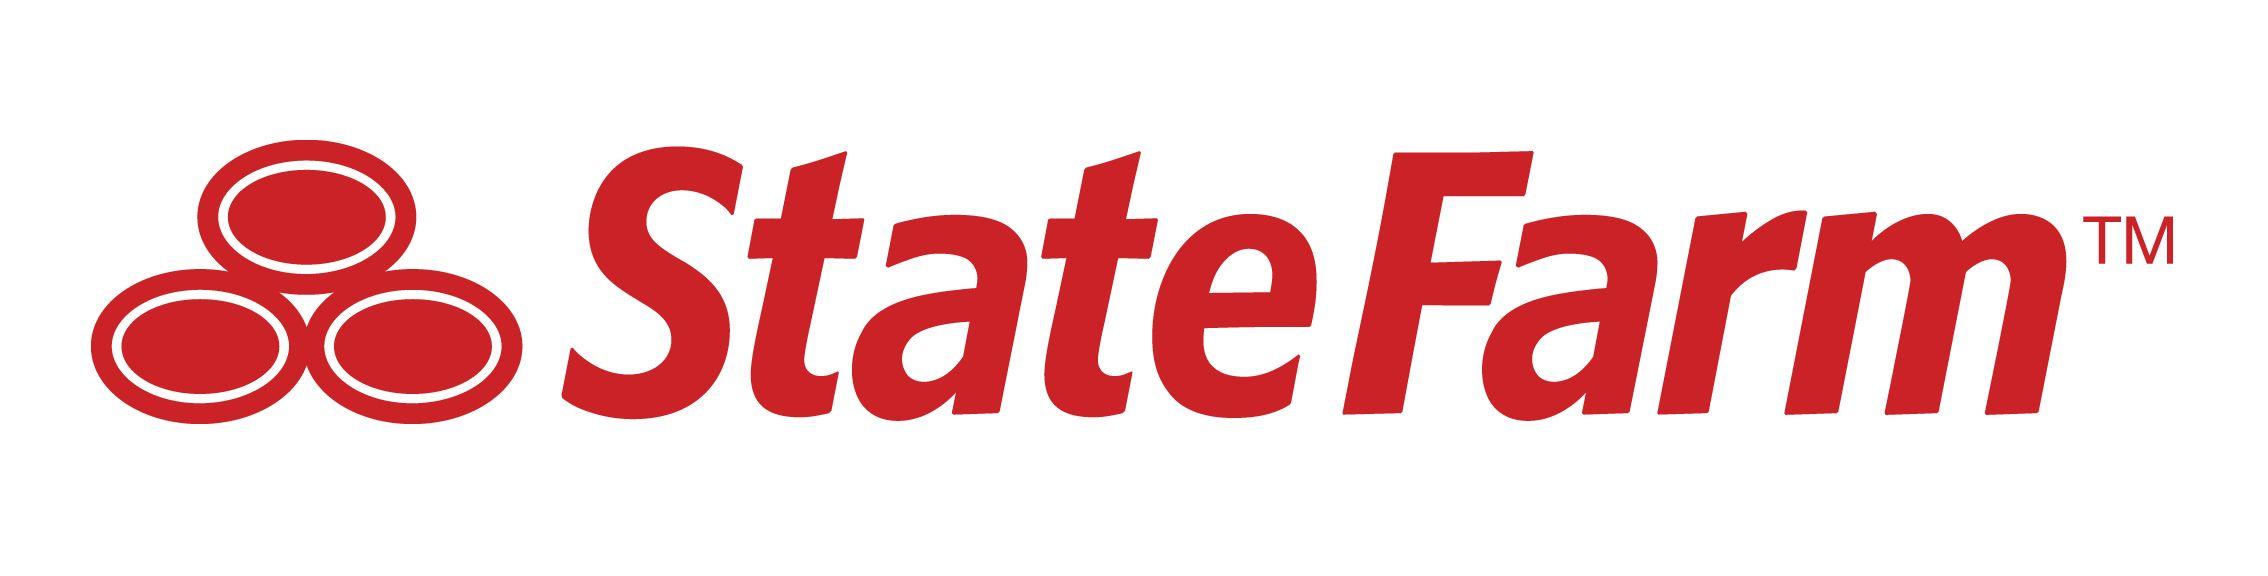 State Farm Logo - State-Farm-New-Logo-2012 - Greater Phoenix Chamber